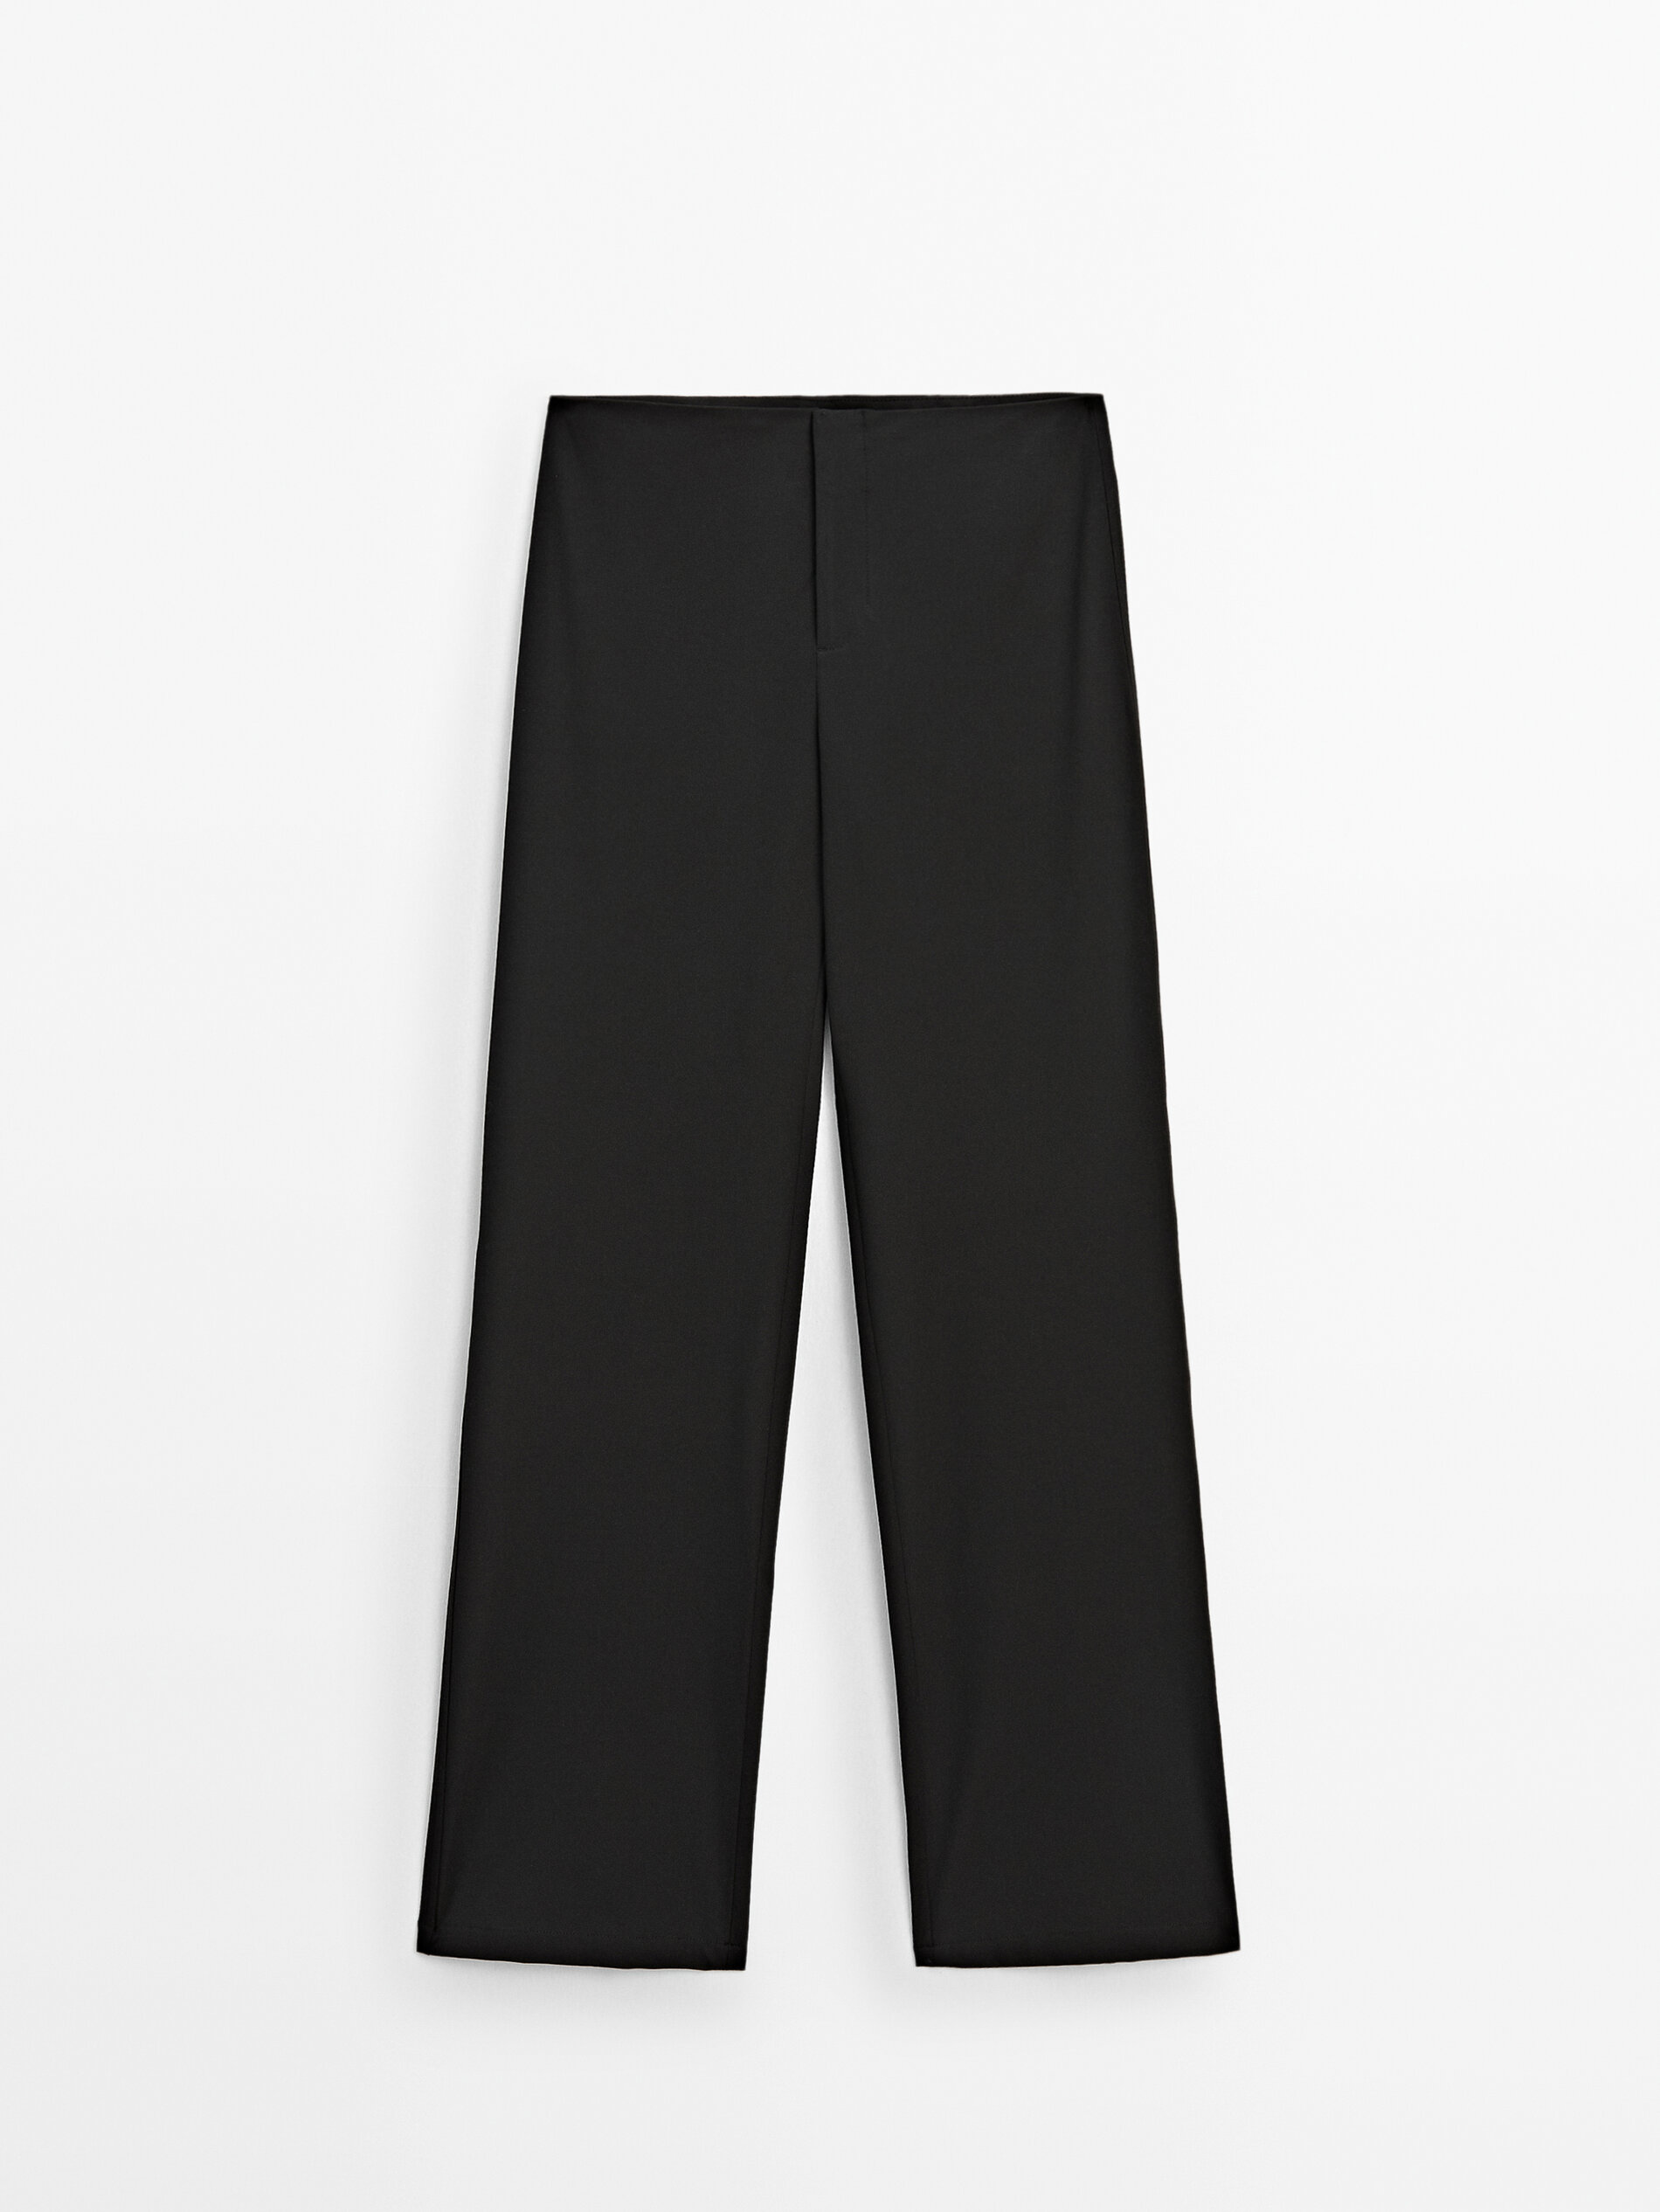 Buy Wrangler Men's Riggs Workwear Ripstop Technical Pant, Dark Khaki, 32x34  at Amazon.in